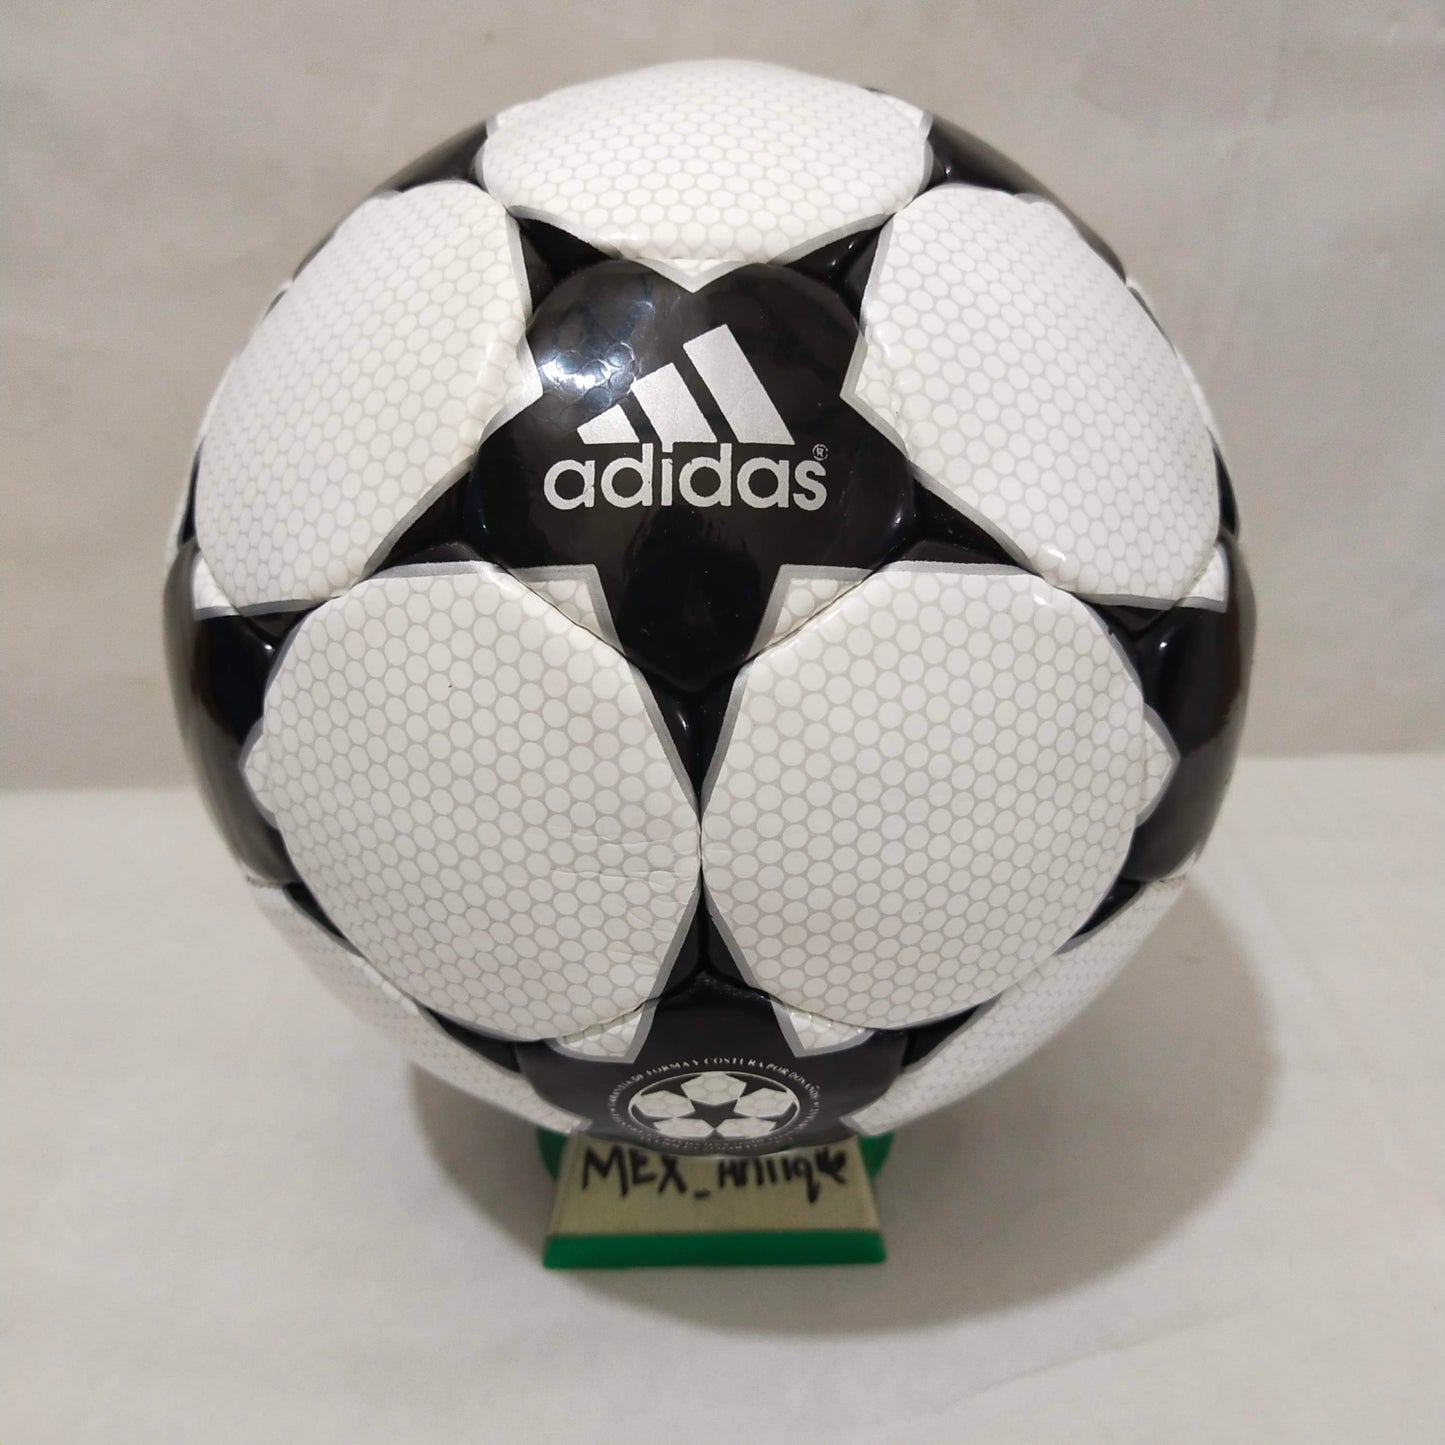 Adidas Finale 2 | 2002-2003 | UEFA Champions League Ball | Size 5 05